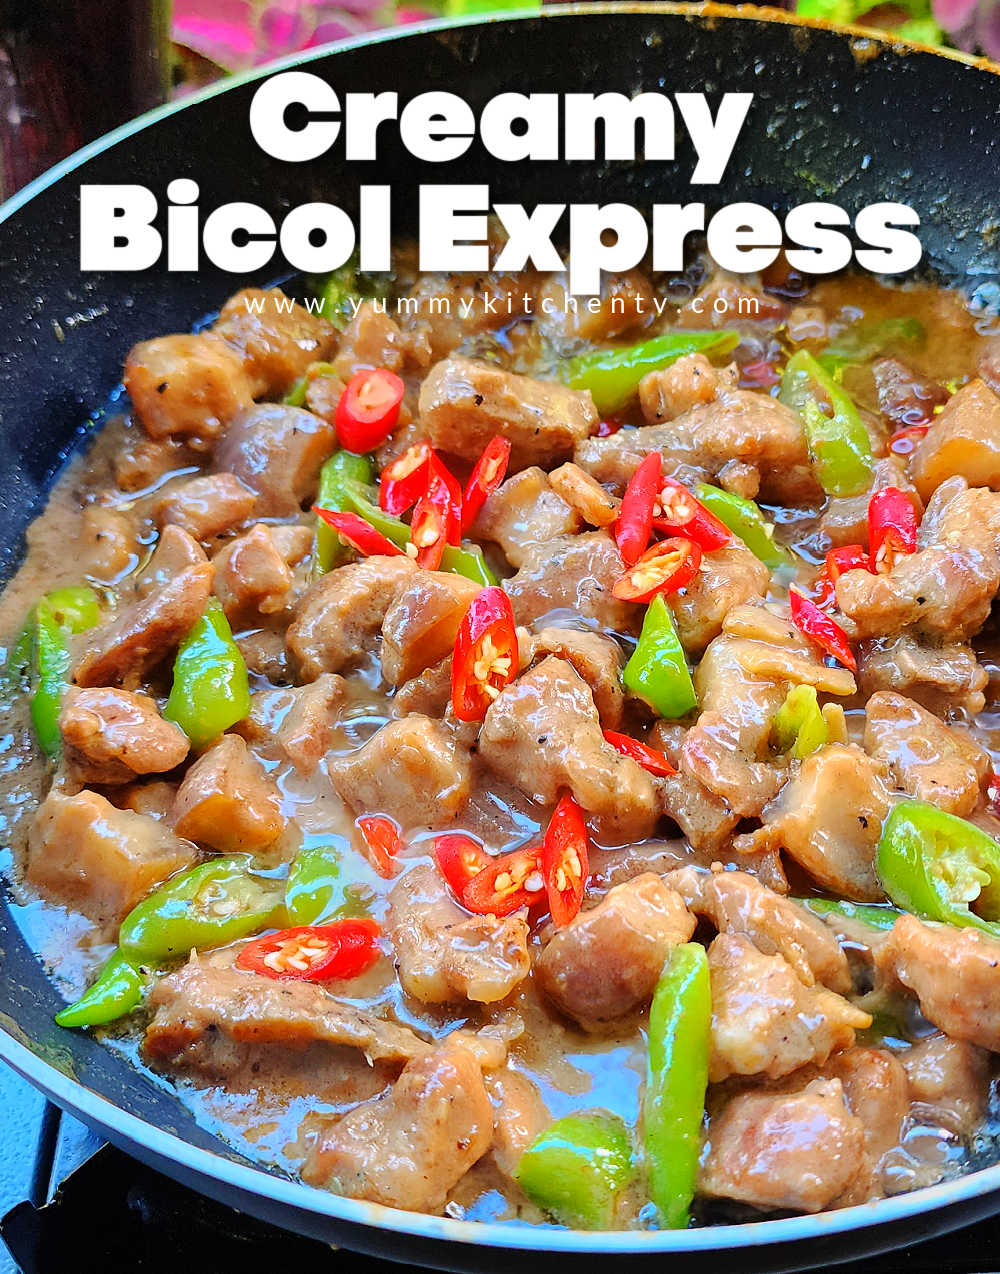 Bicol Express - Yummy Kitchen